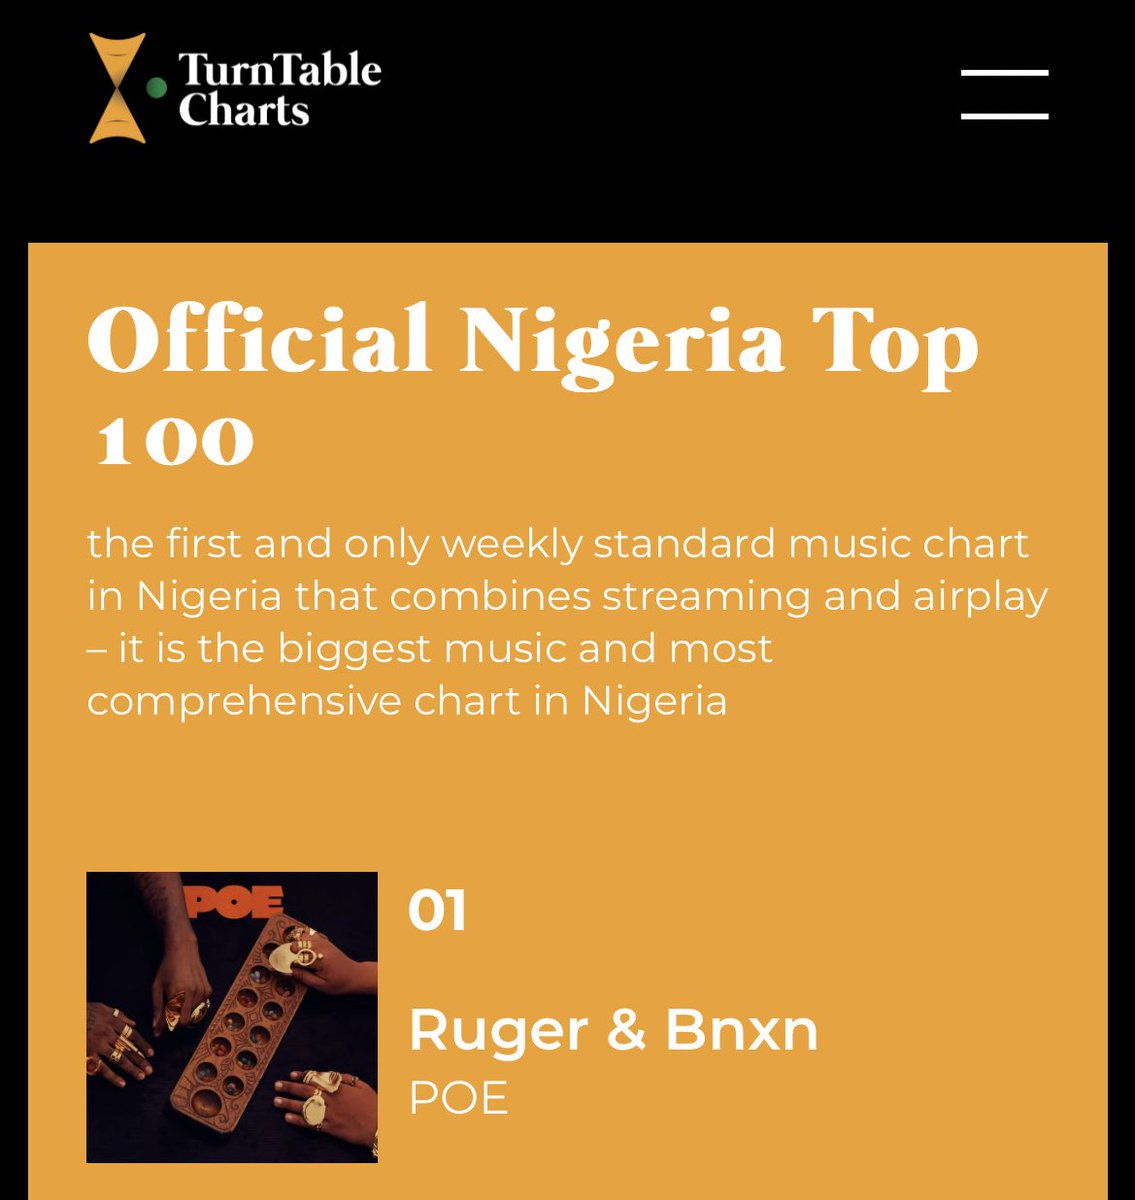 Artistes with the most top ten entries on the official singles chart in Nigeria — @davido 26 — @asakemusik 24 — @burnaboy 21 — @BNXN 17 — @Omah_Lay 15 — @KizzDaniel 15 — @wizkidayo 14 — @seyi_vibez 13 — @zinoleesky01 13 — @Olamide 12 — @ayrastarr 12 — @BellaShmurda 12 —